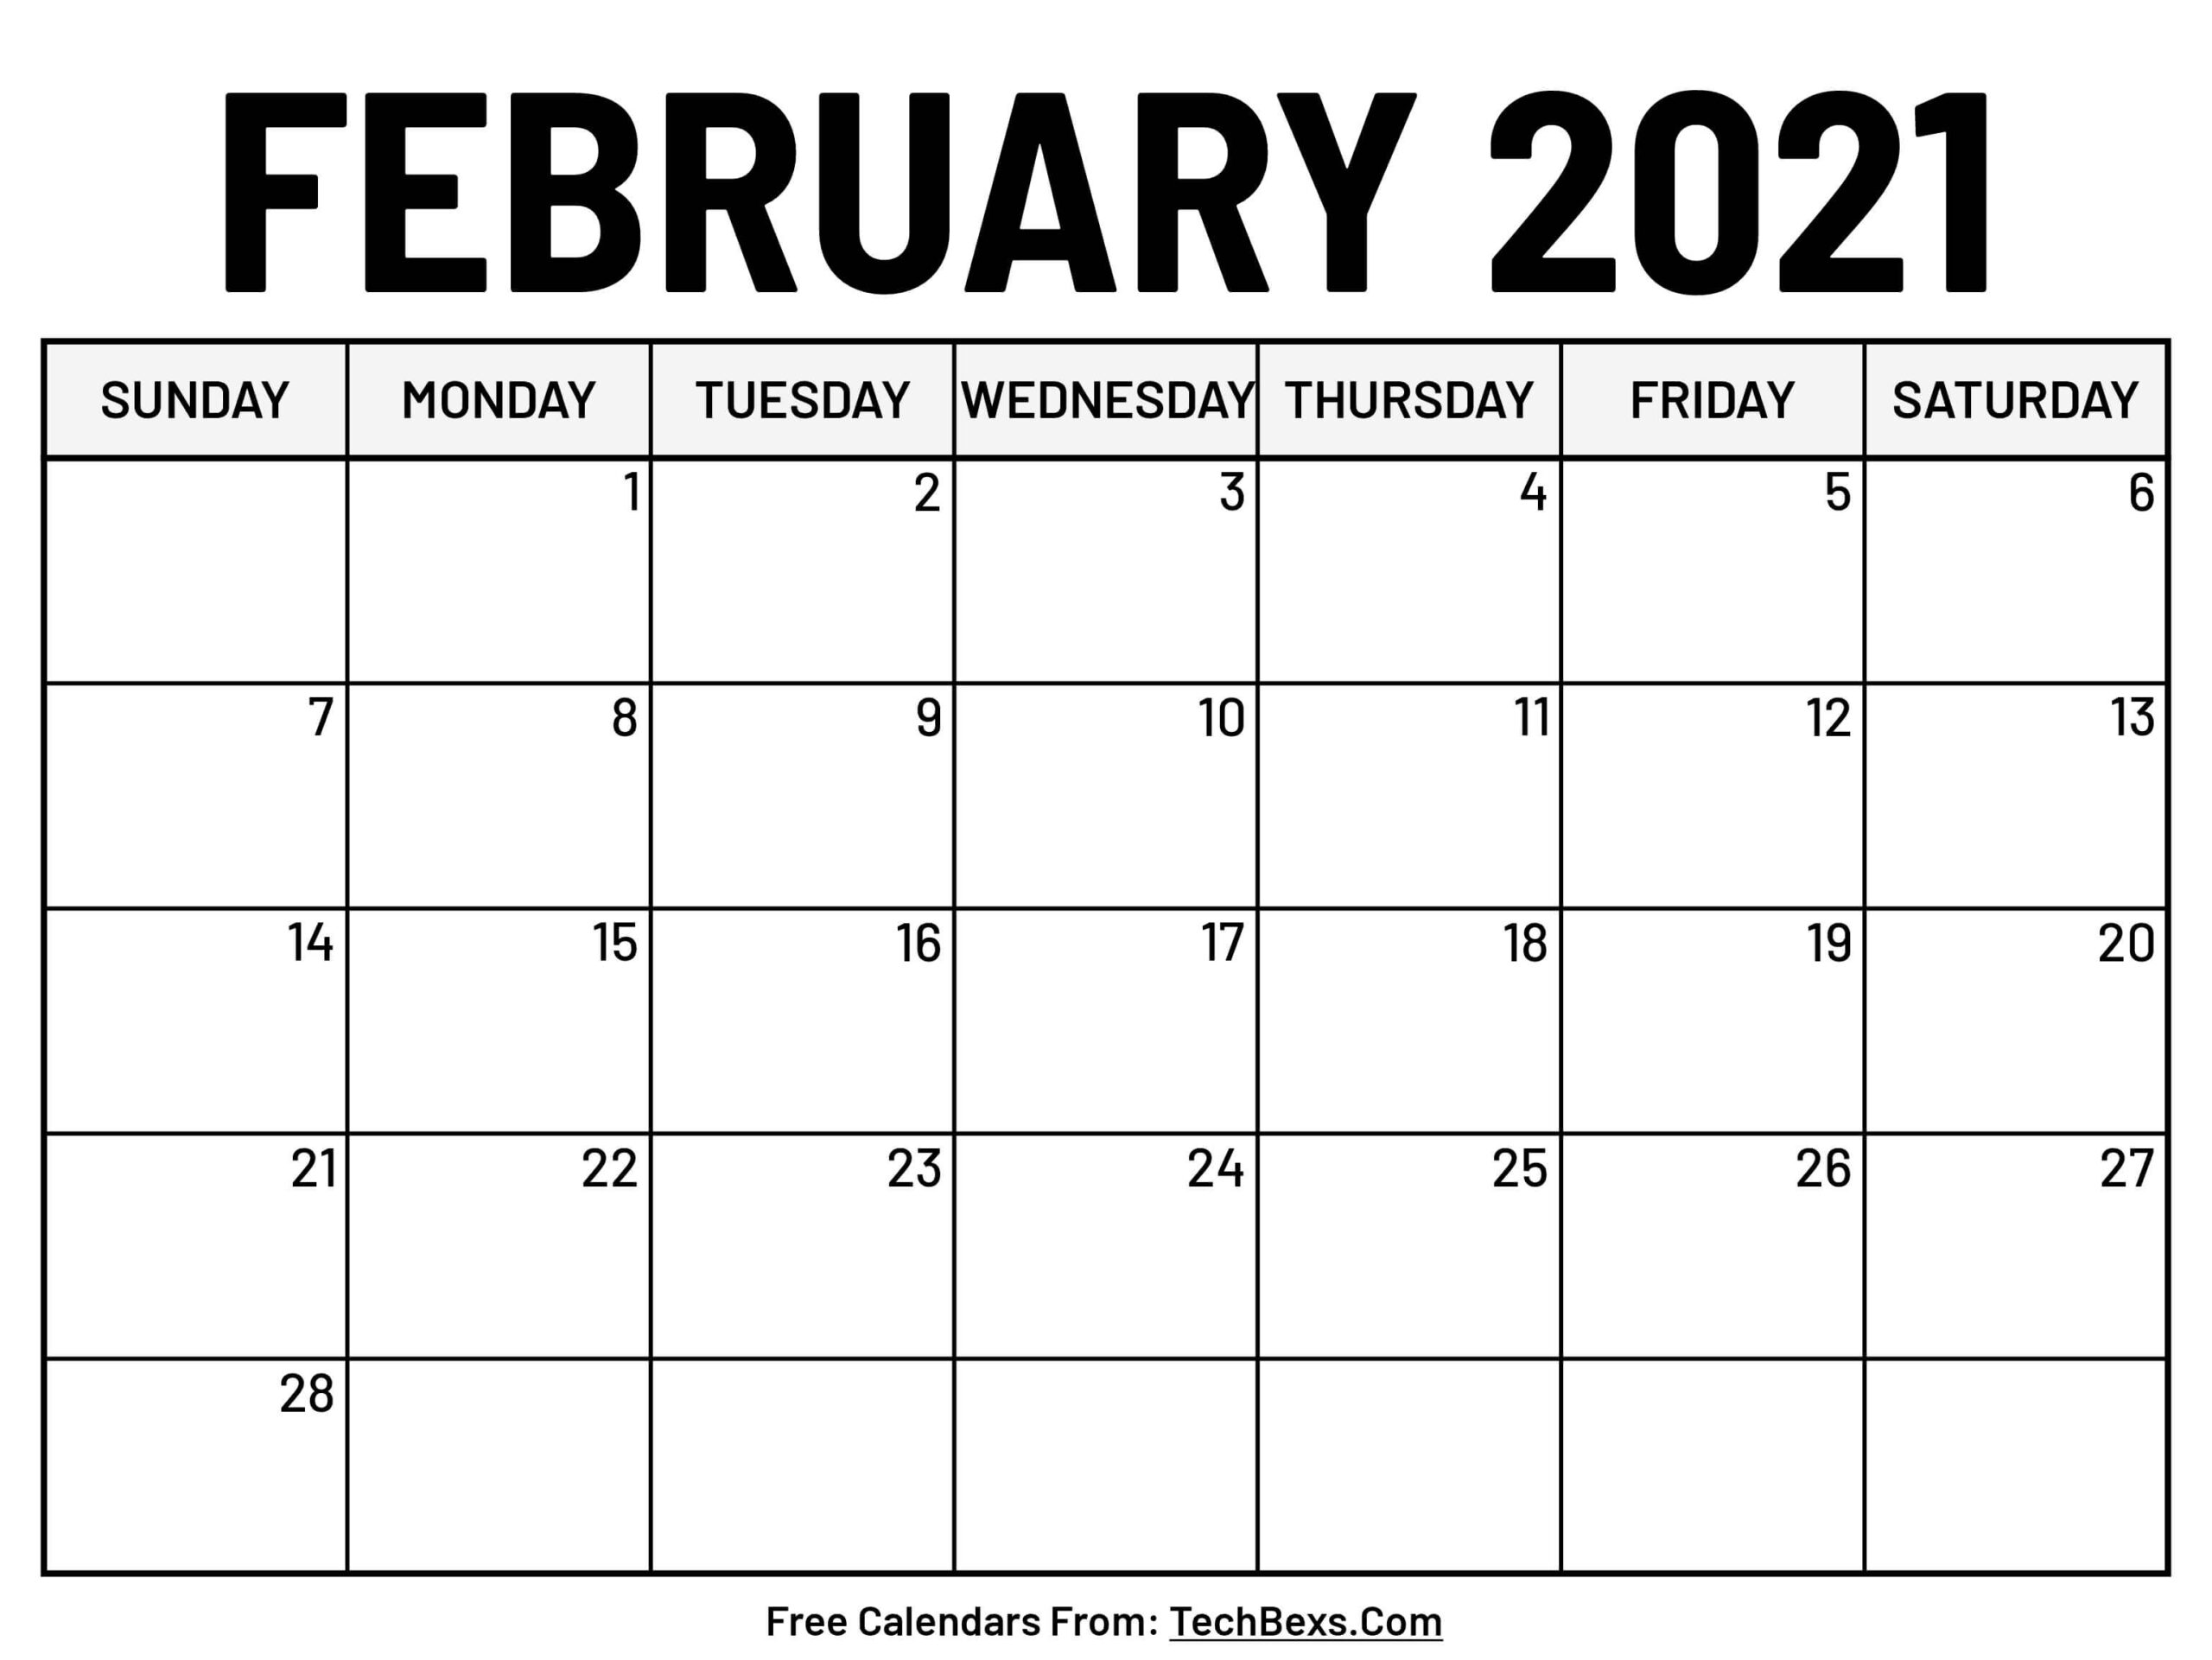 Monthly February 2021 Calendar Template-February 2021 Calendar